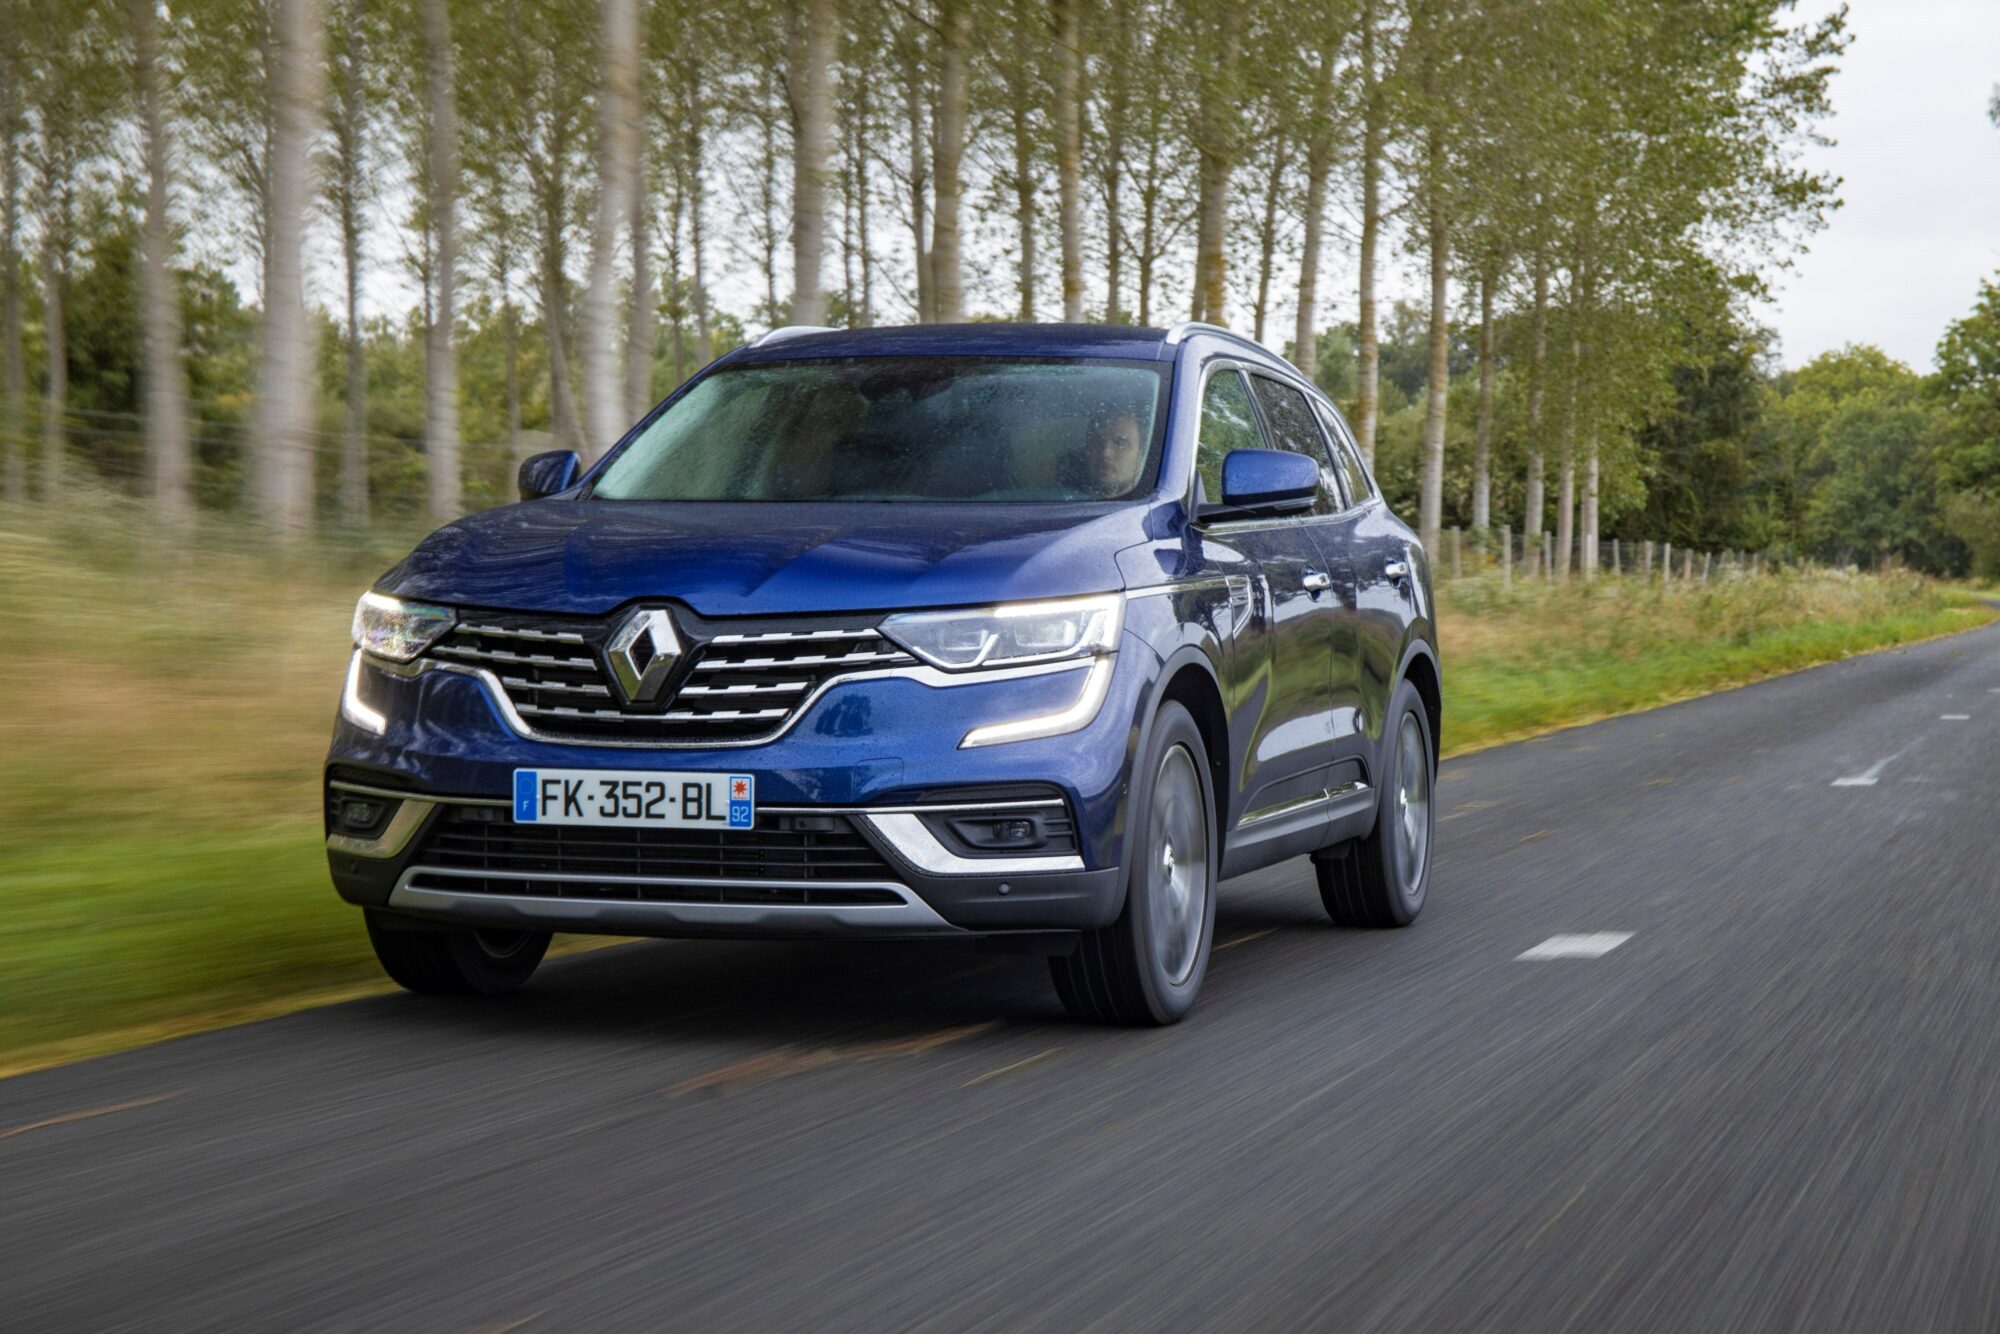 2019 - New Renault KOLEOS Drive Test